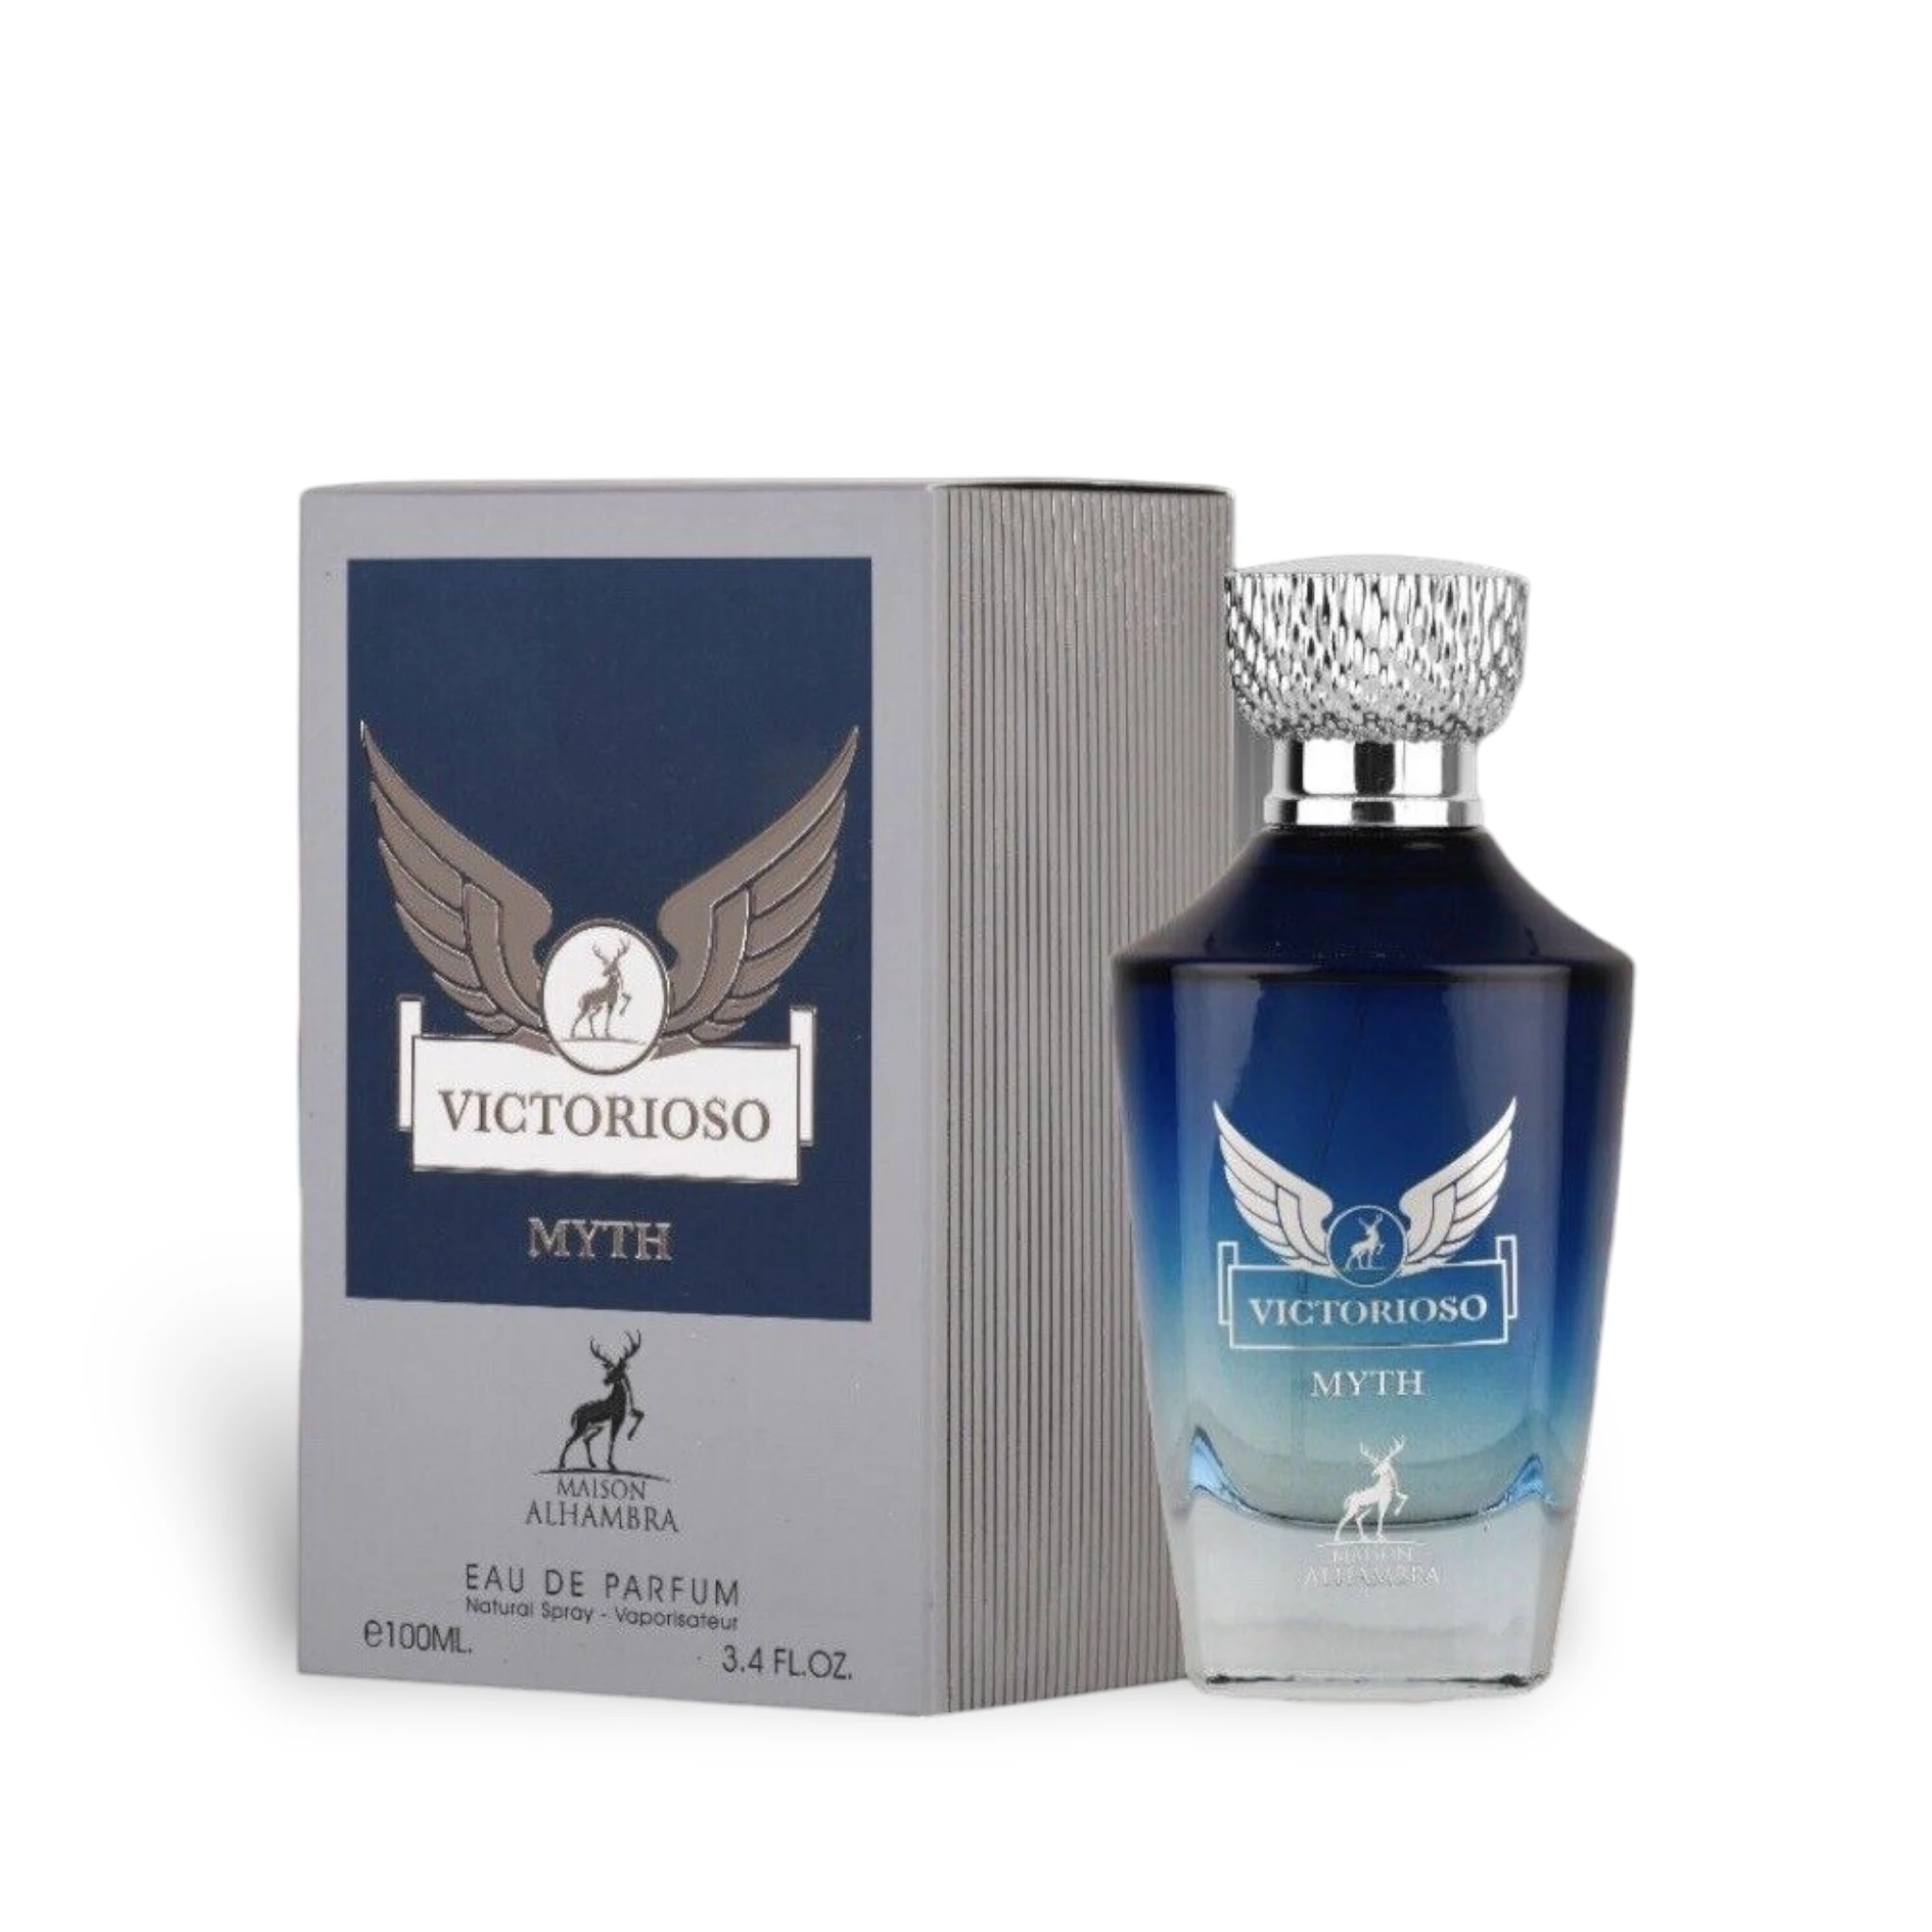 Victorioso Myth Legend Perfume Eau De Parfum By Maison Alhambra Lattafa (Inspired By Invictus Legend)